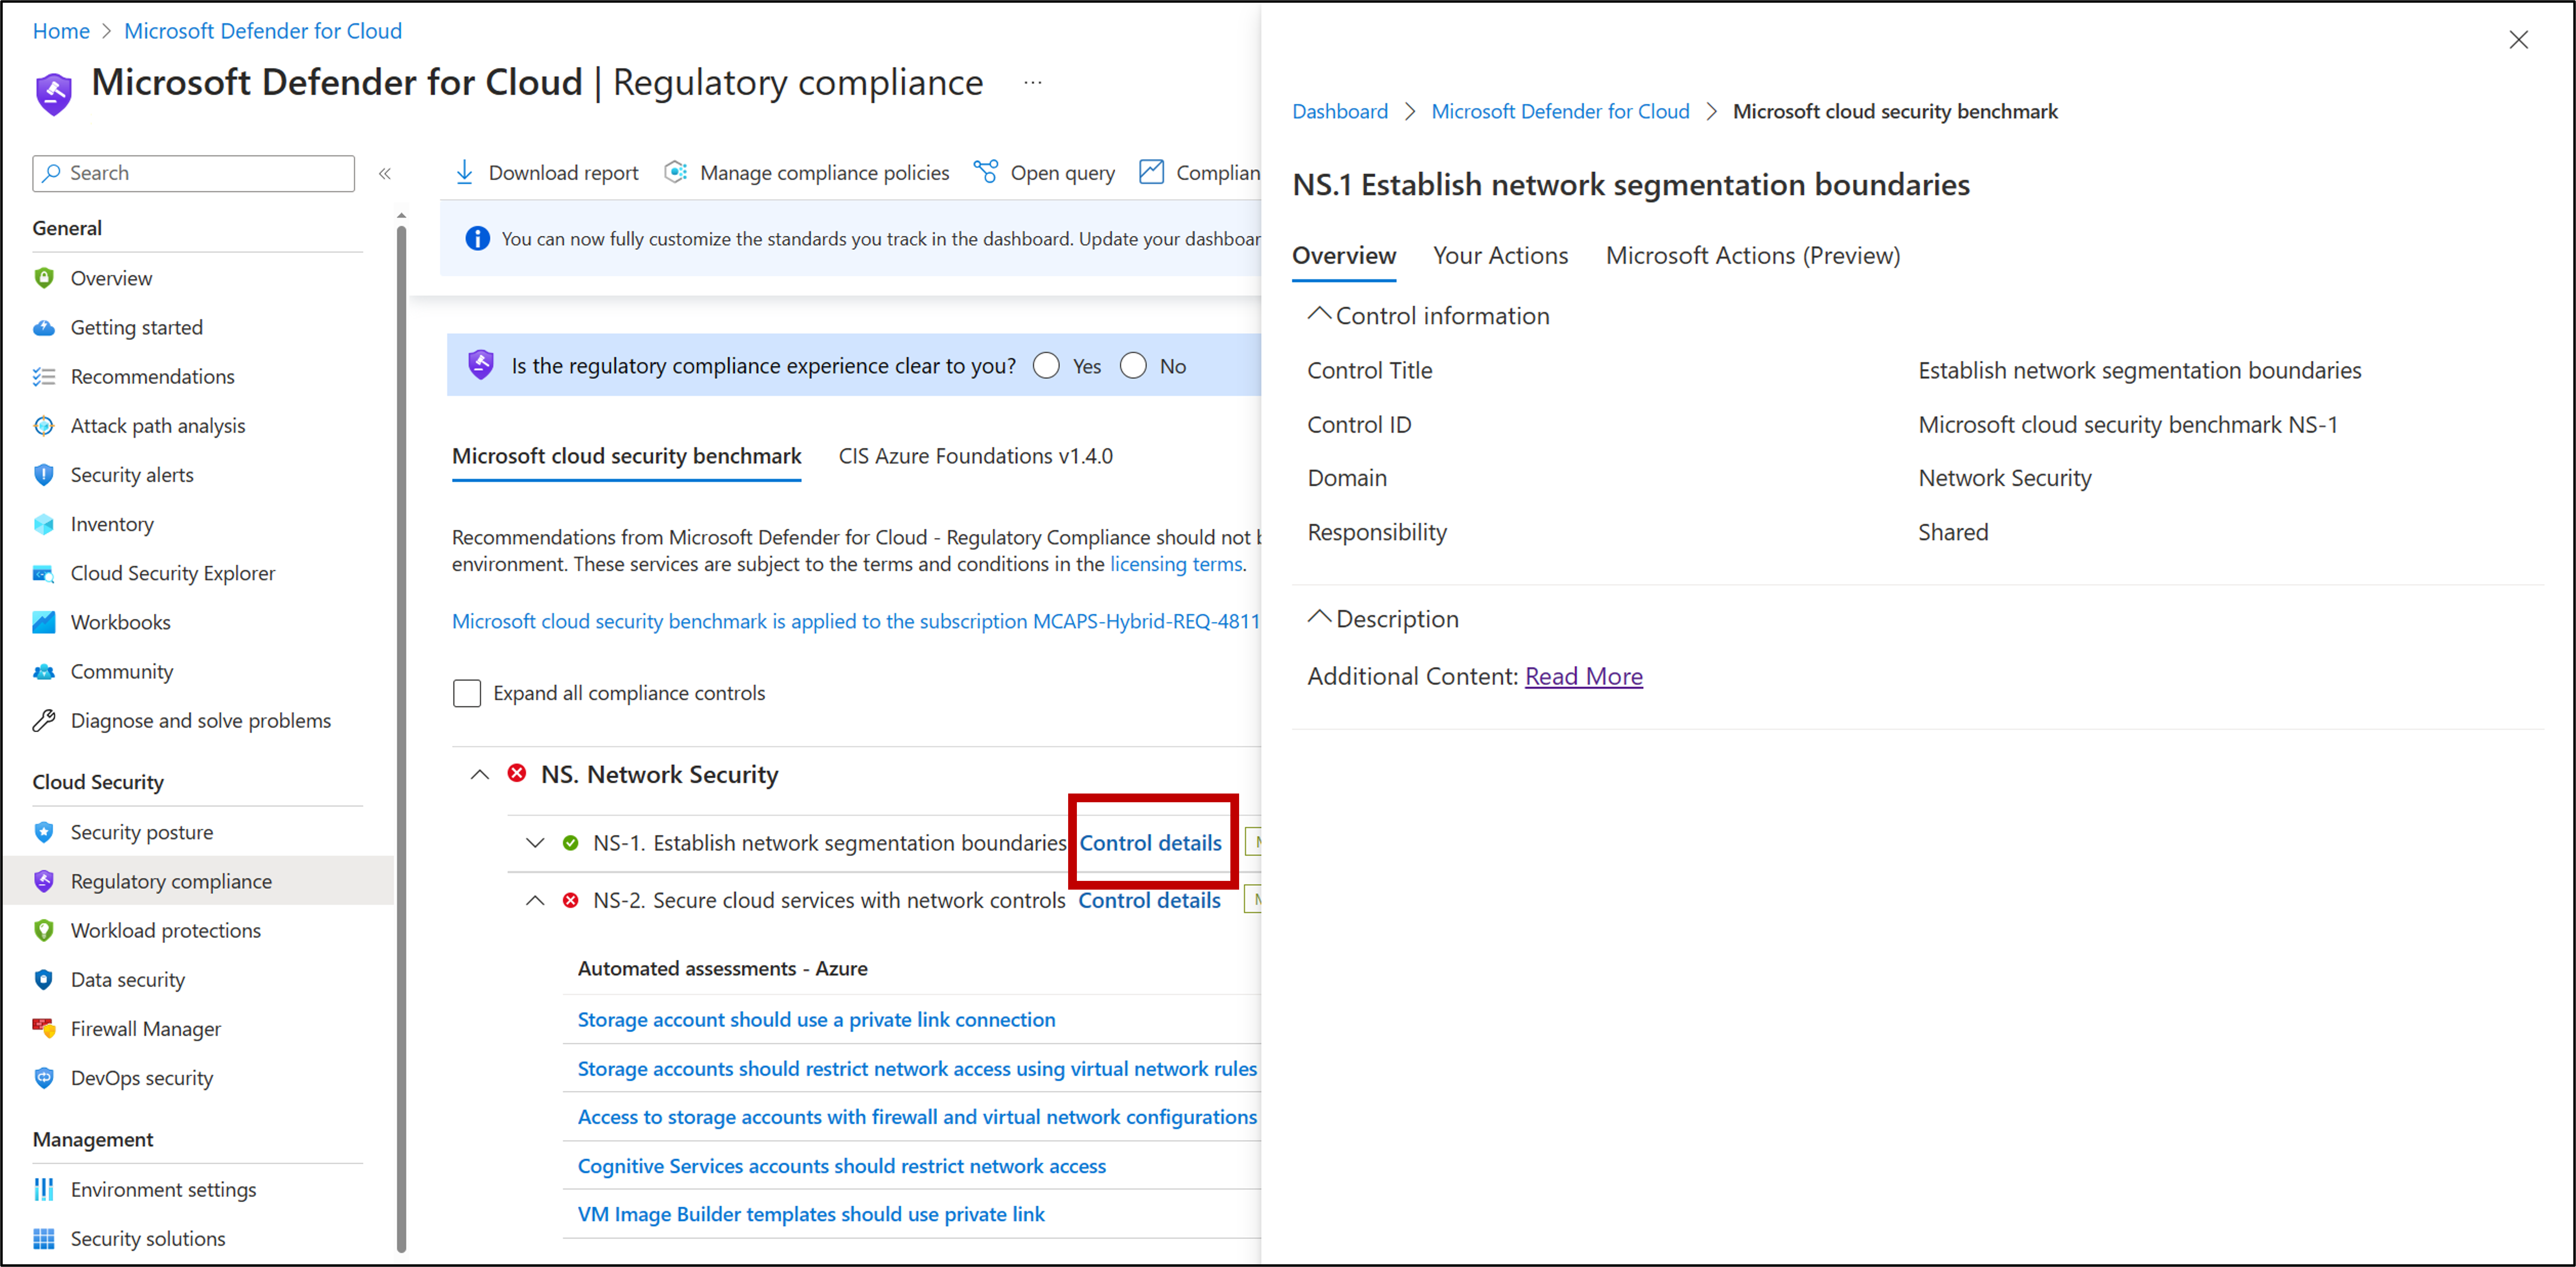 Screenshot showing the Defender for Cloud Regulatory compliance Control details.